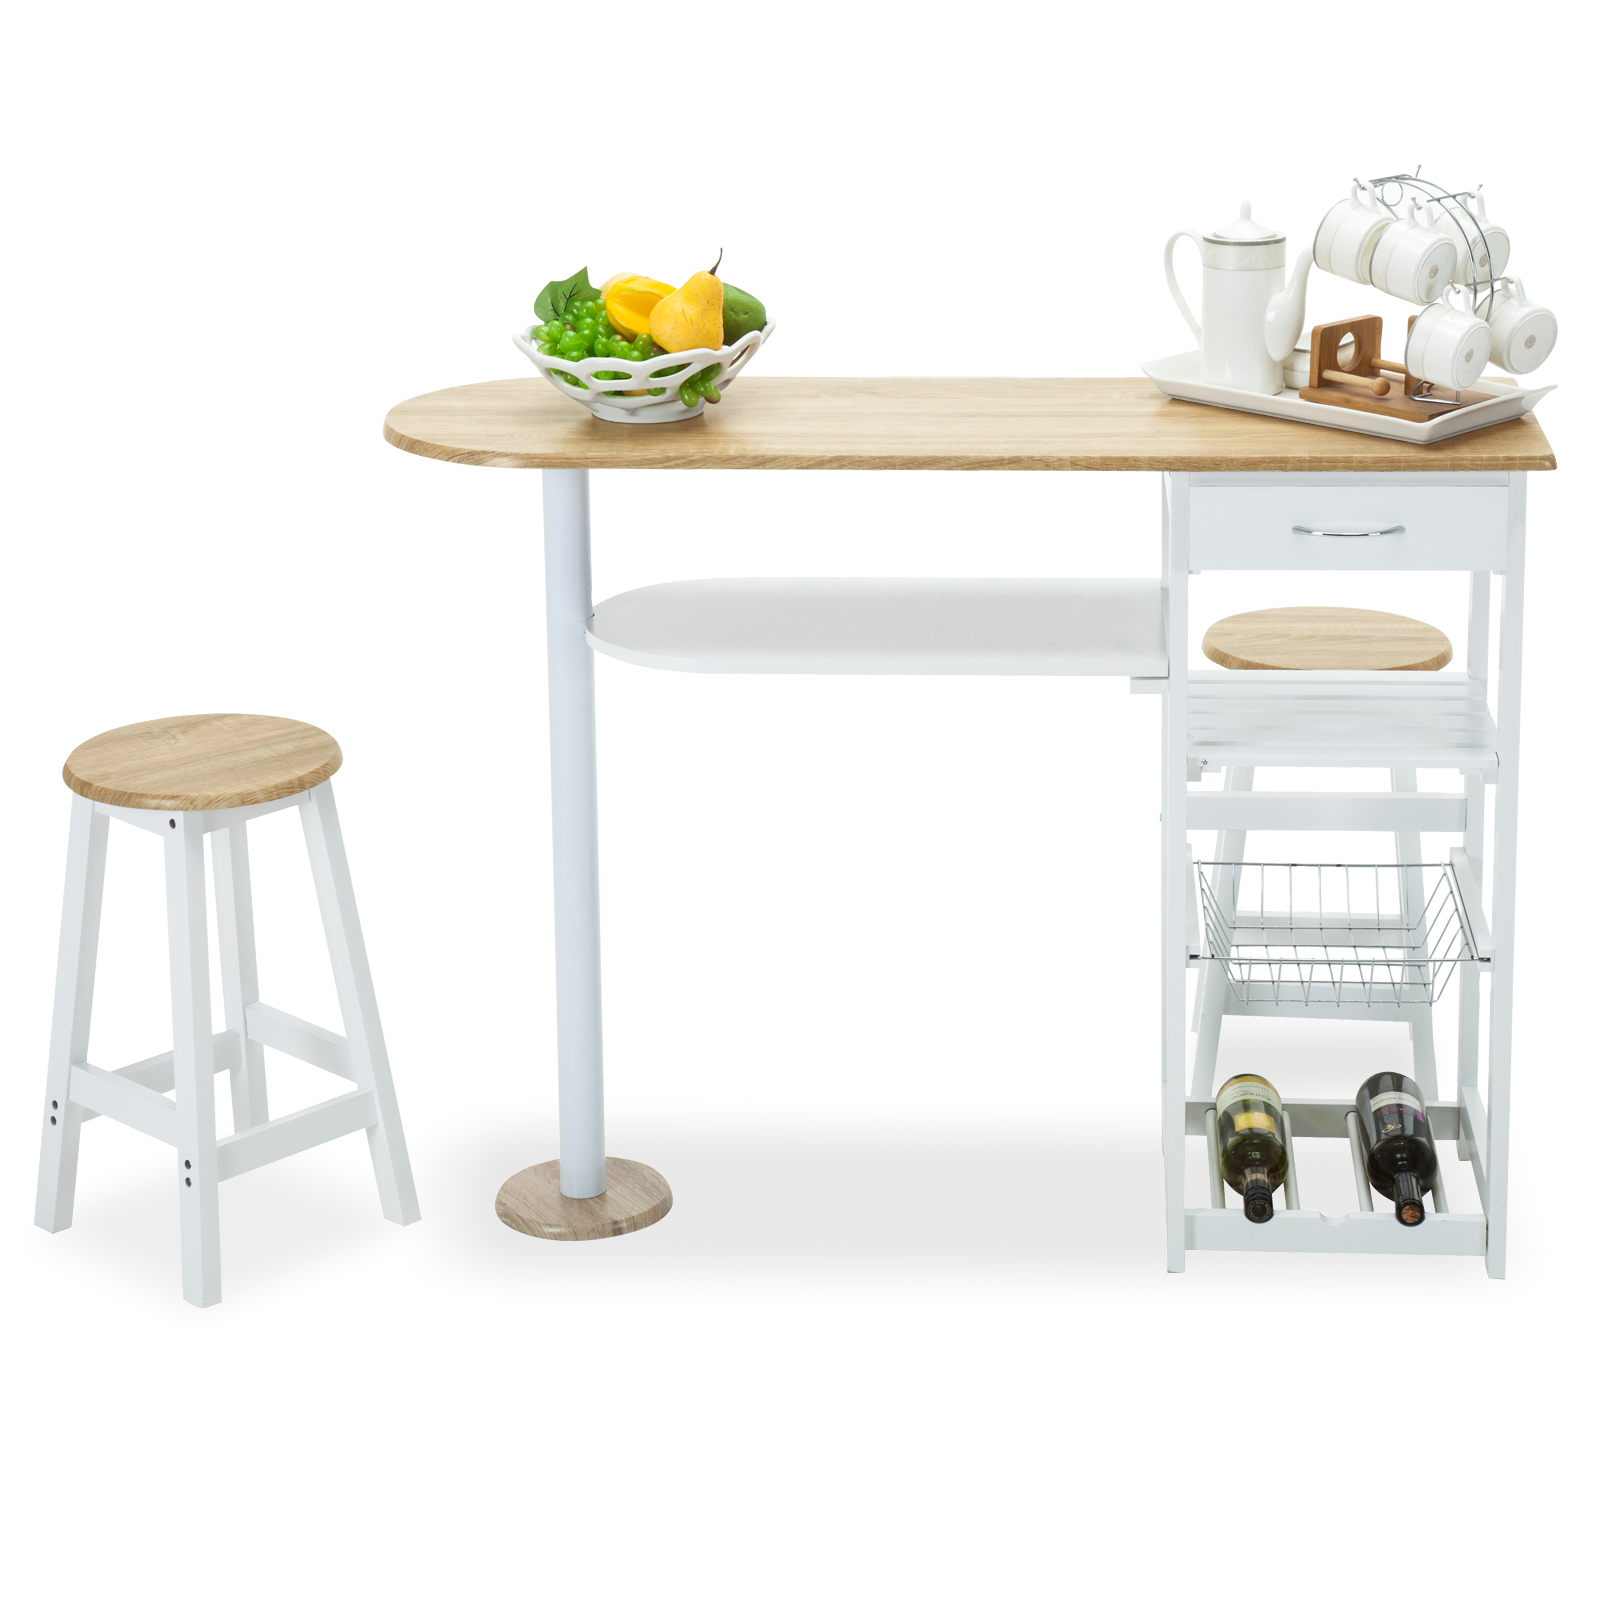 Kitchen Storage Tables / Kitchen Table With Storage Underneath - Foter